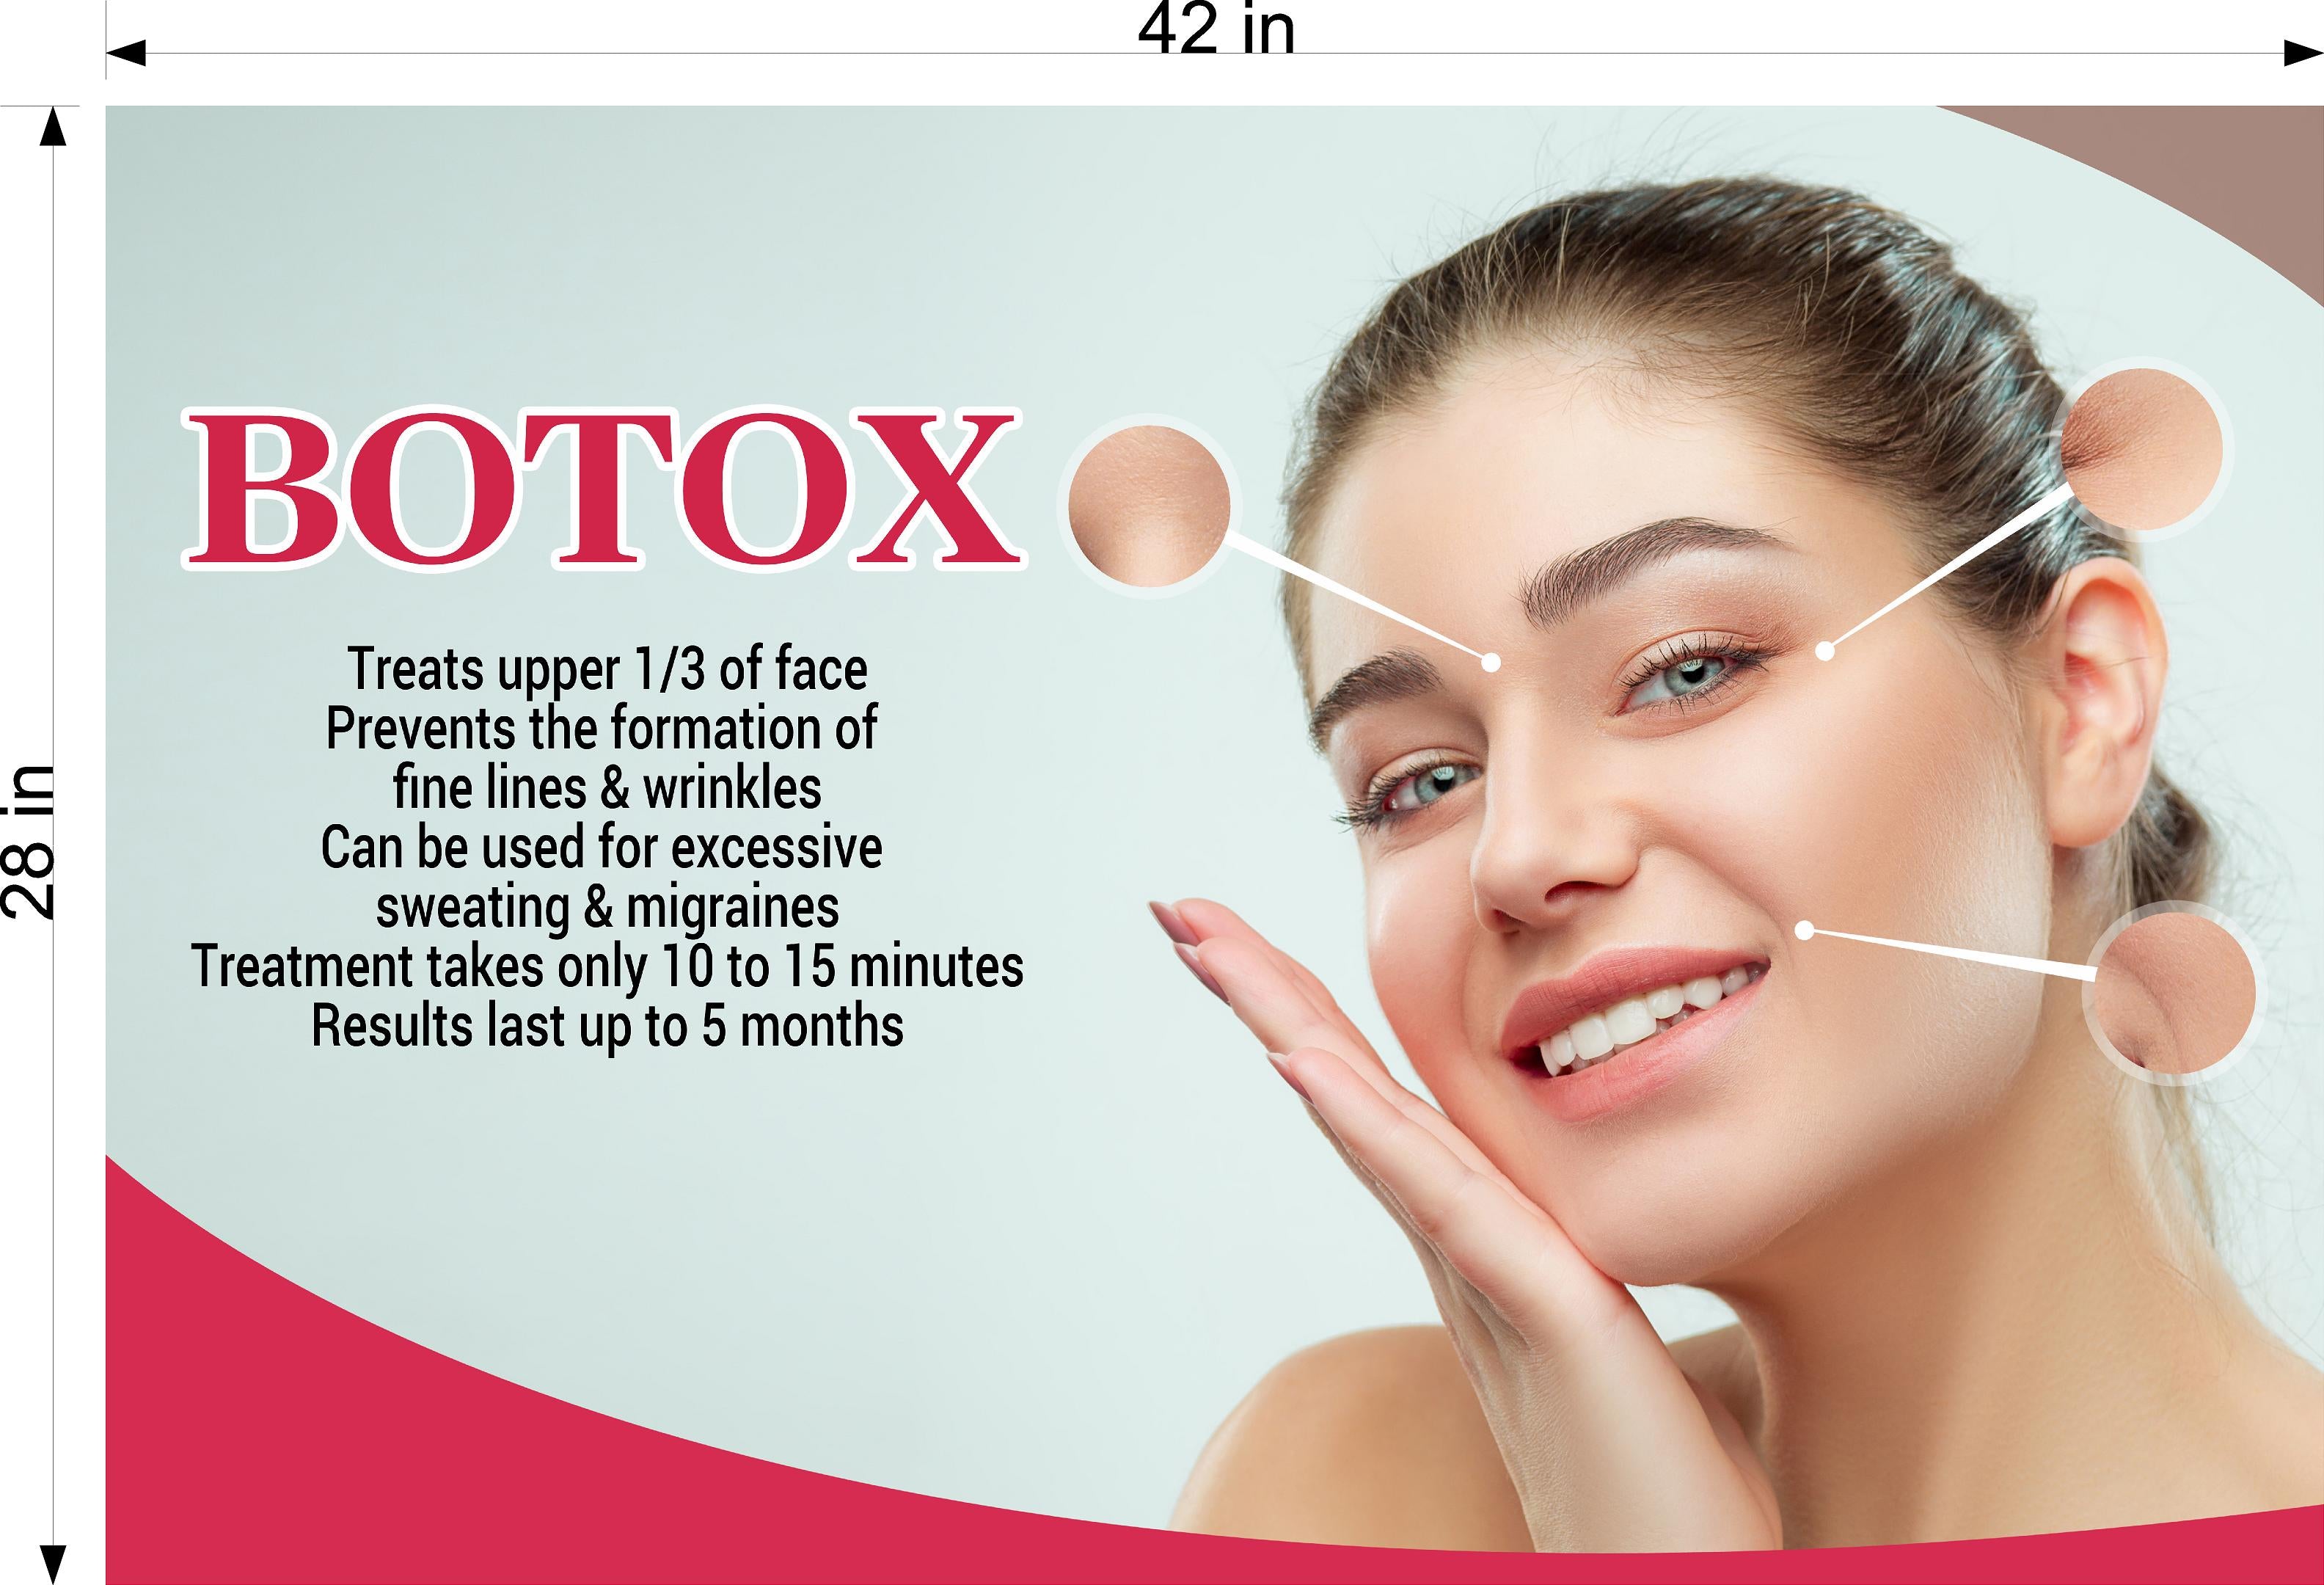 Botox 09 Perforated Mesh One Way Vision See-Through Window Vinyl Poster Sign Horizontal